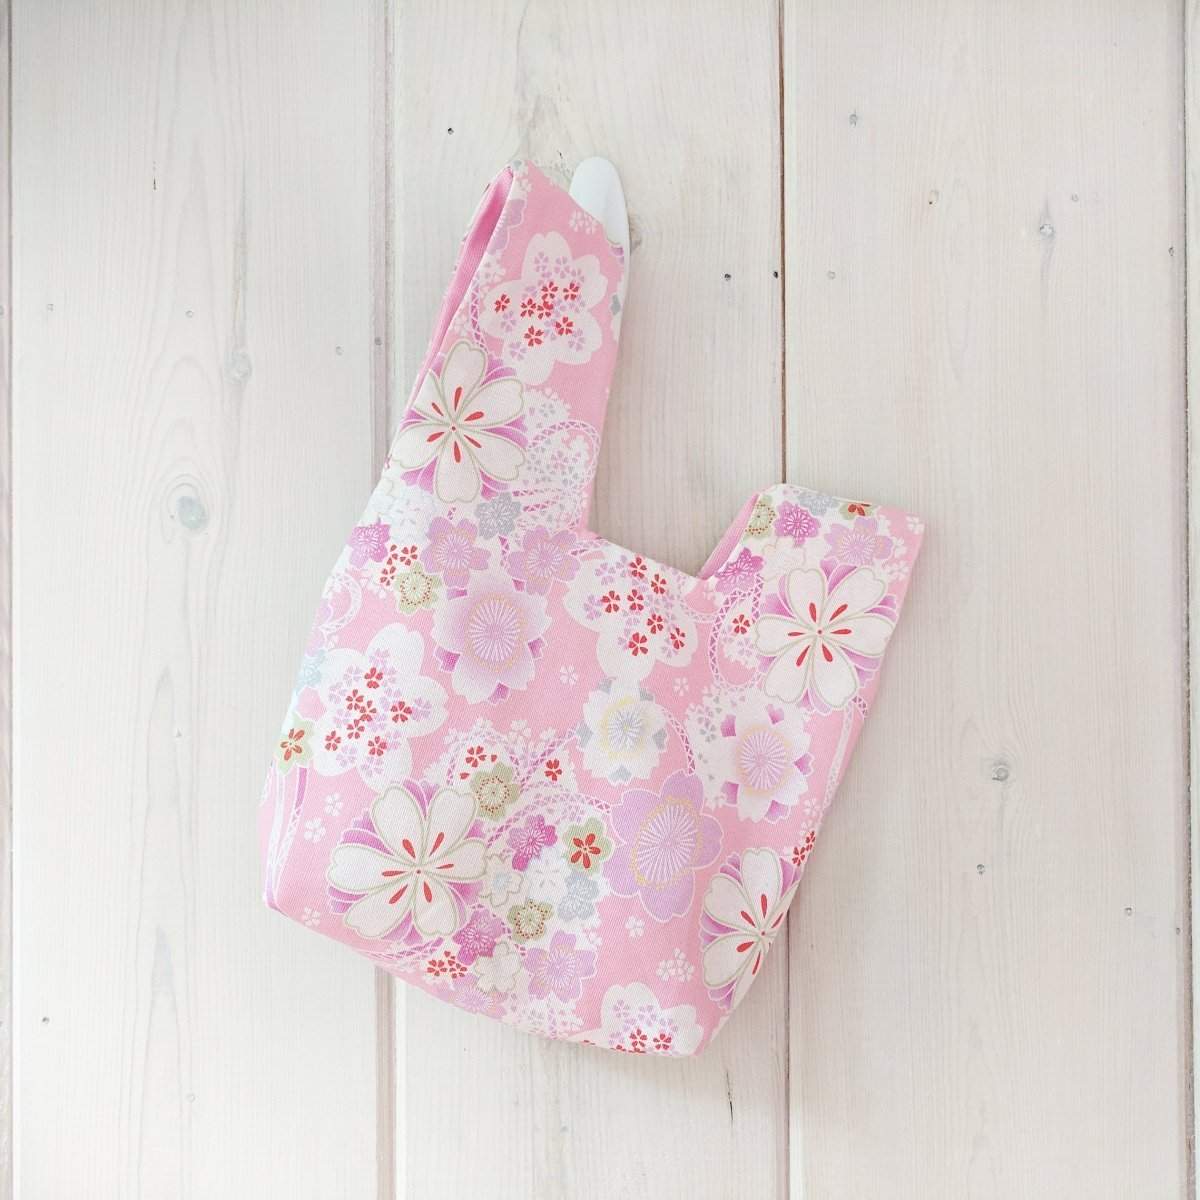 Kimono Knot Bag Wristlet Cherry Blossom Sakura Pink - Front